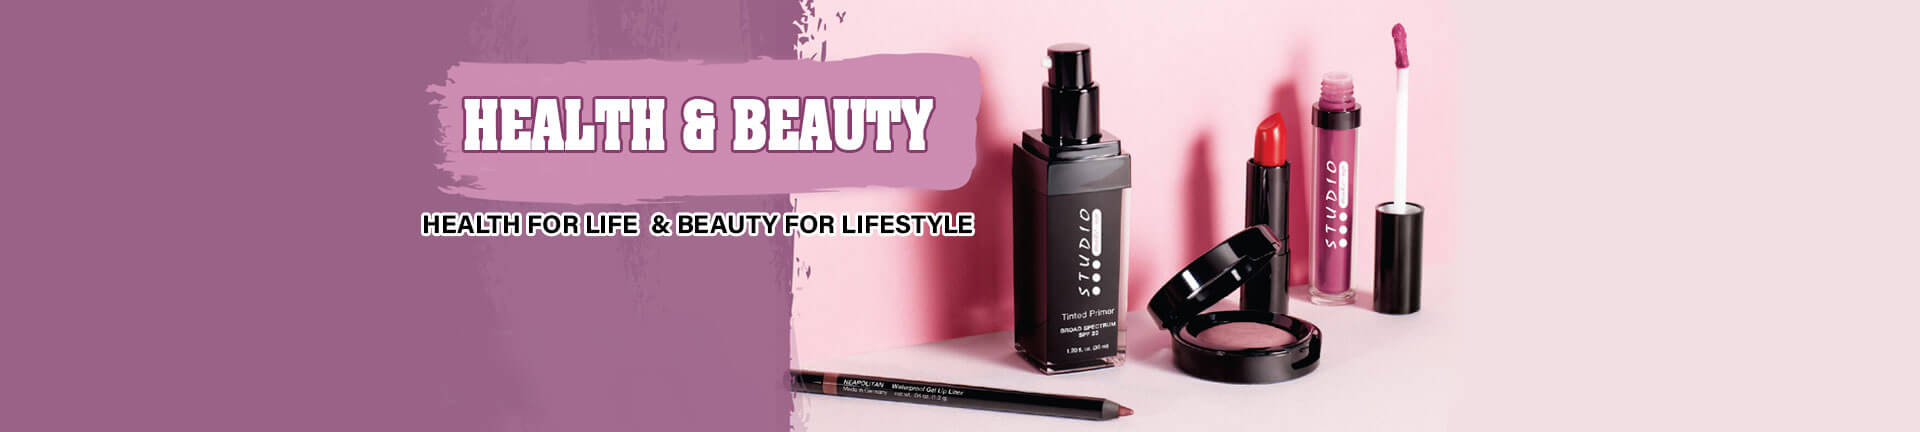 Health & Beauty Products Price Online in Pakistan - Kayazar